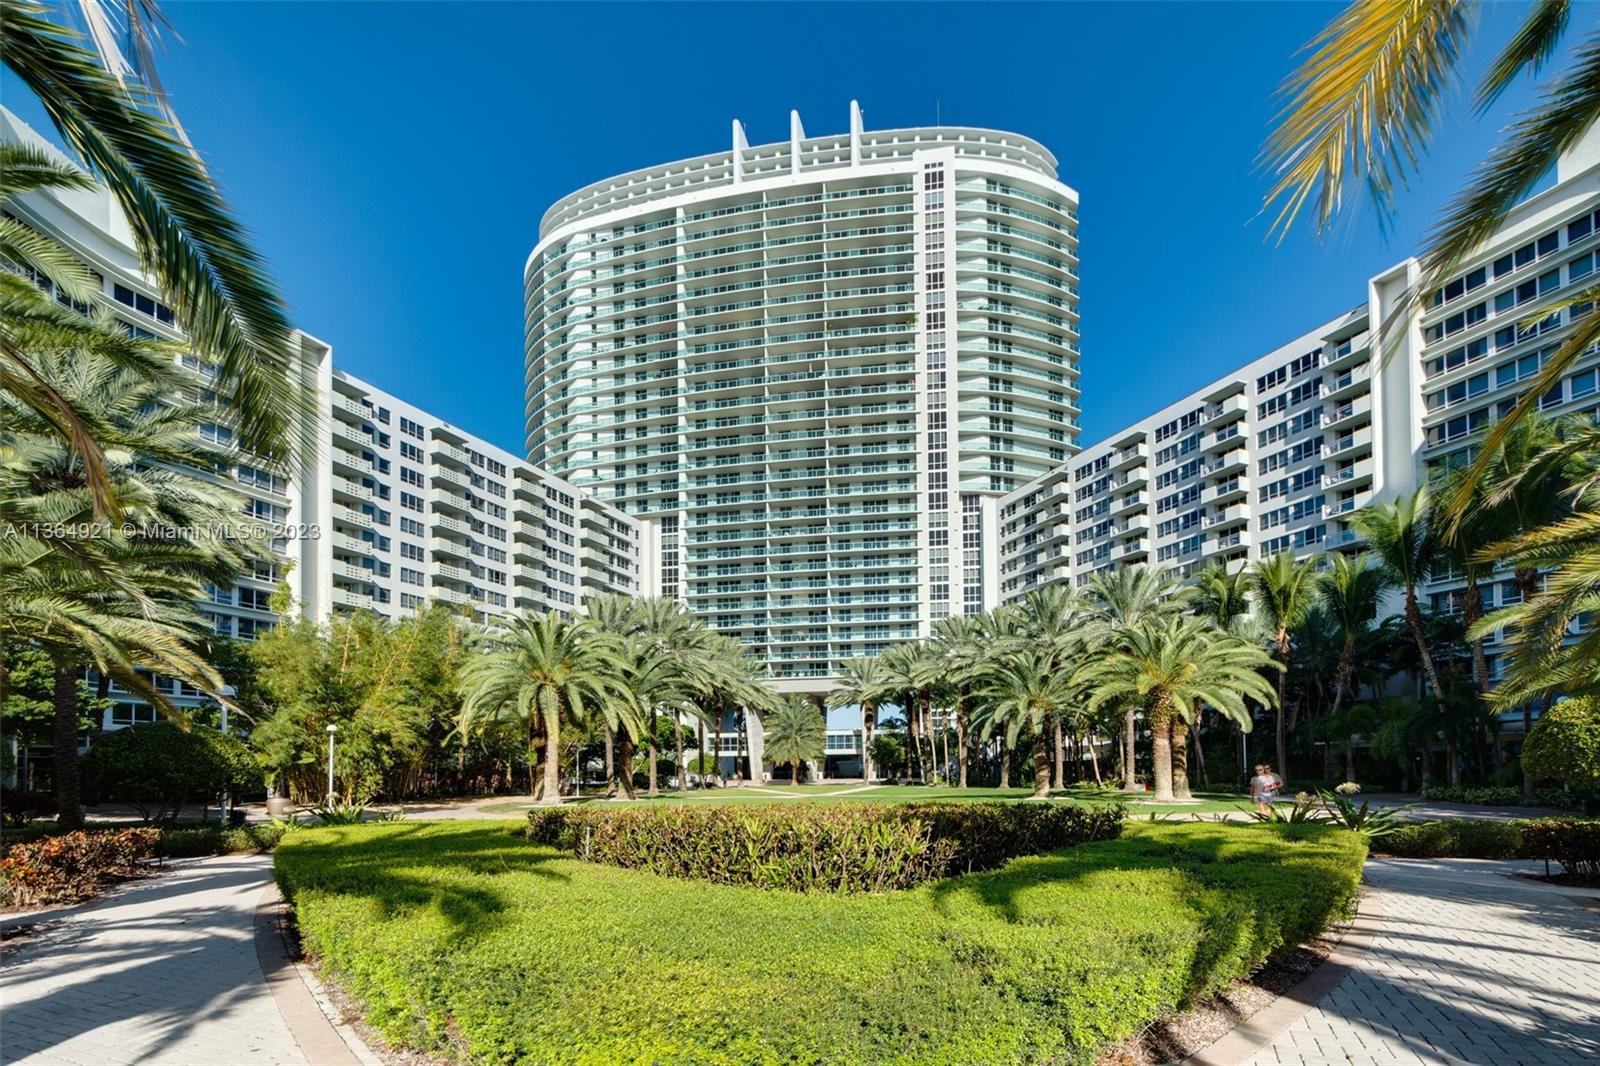 Property for Sale at 1500 Bay Rd 340S, Miami Beach, Miami-Dade County, Florida - Bedrooms: 1 
Bathrooms: 2  - $575,000